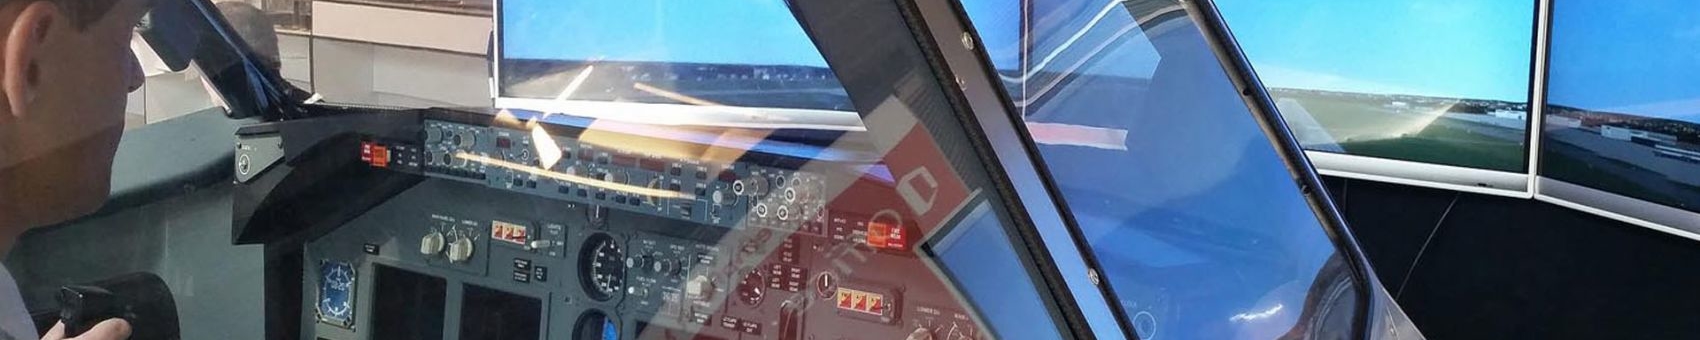 01-eyeconcept-flugsimulator-cockpit-002